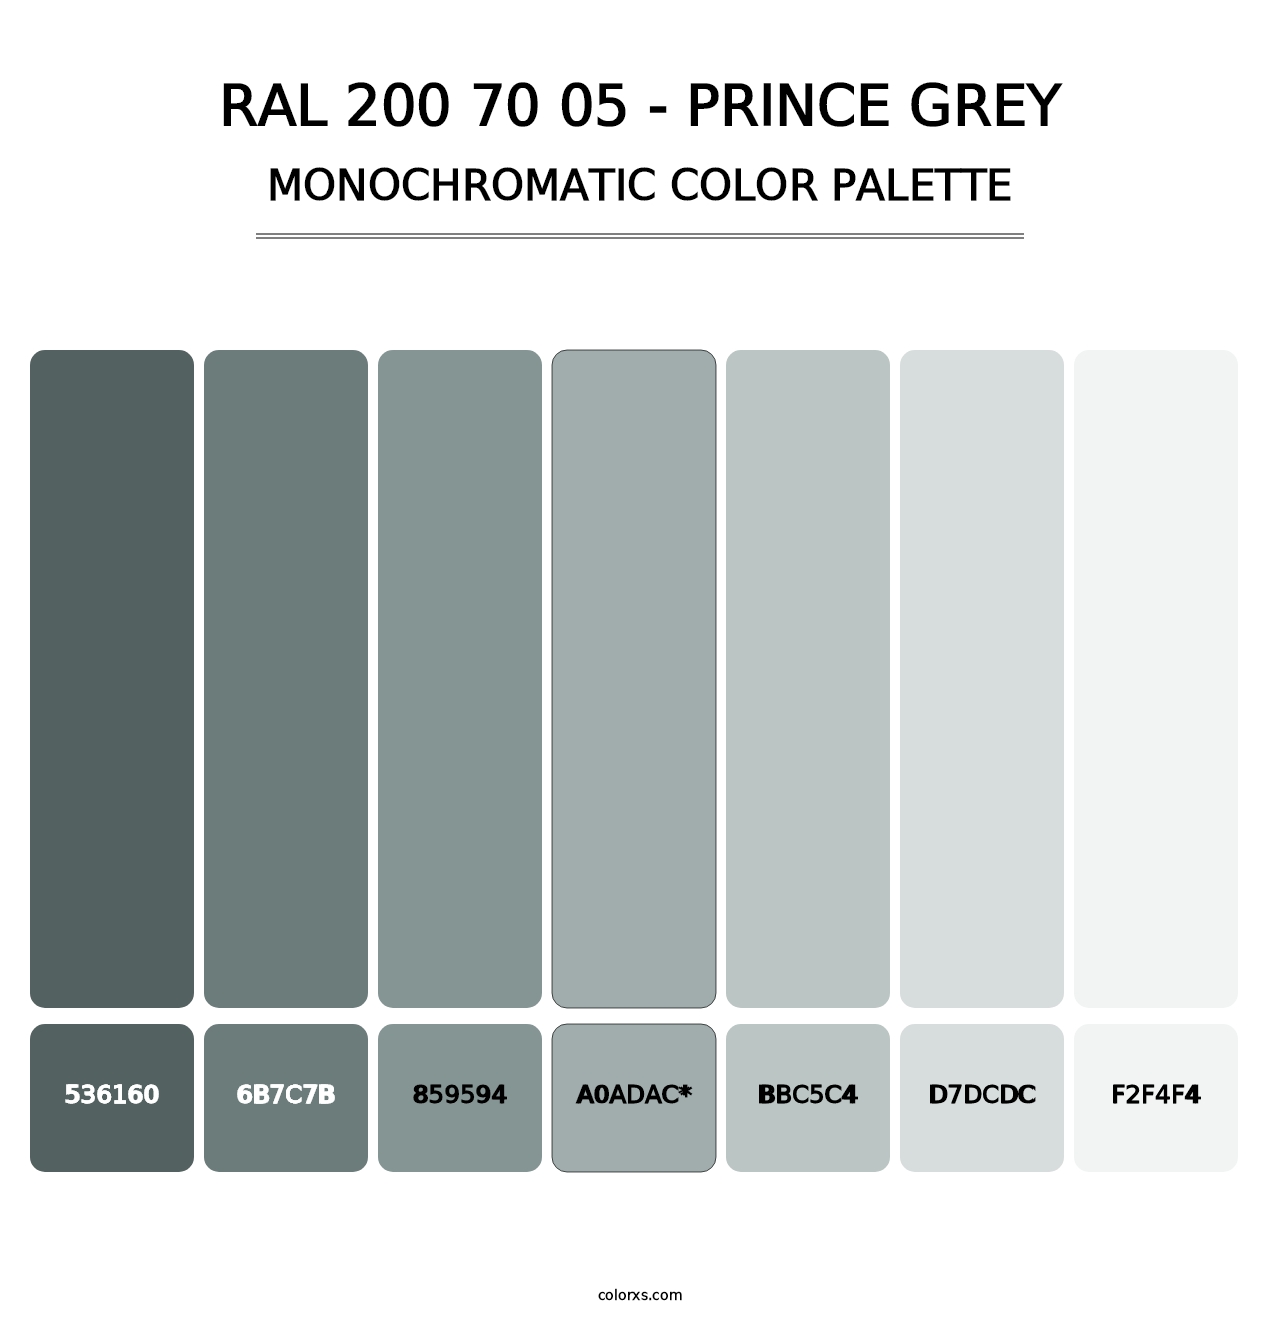 RAL 200 70 05 - Prince Grey - Monochromatic Color Palette